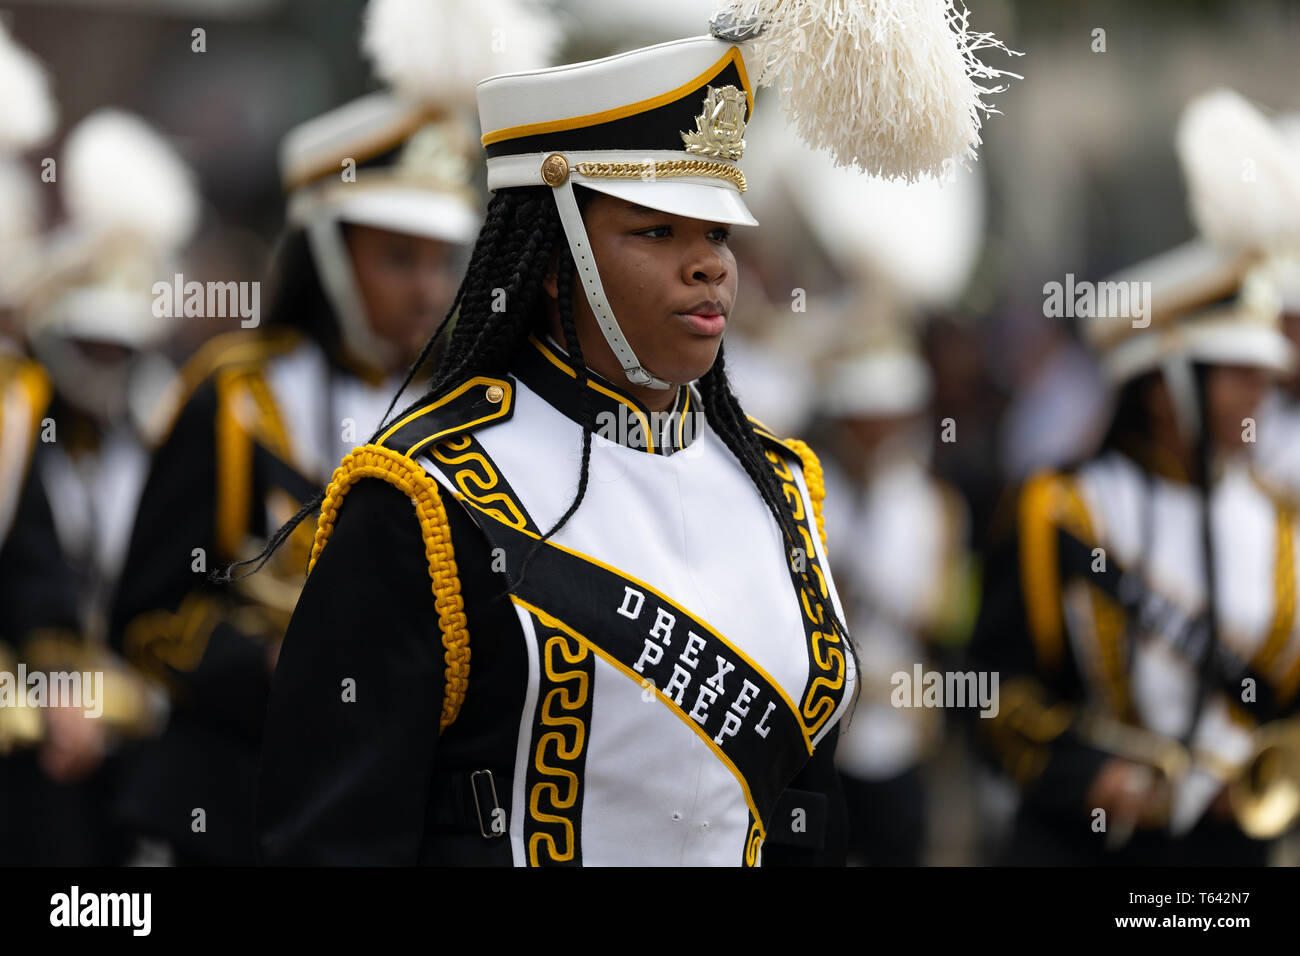 New Orleans, Louisiana, USA - February 23, 2019: Mardi Gras Parade, The Saint Katharine Drexel Preparatory School, The Yellow Jackets Marching band, p Stock Photo